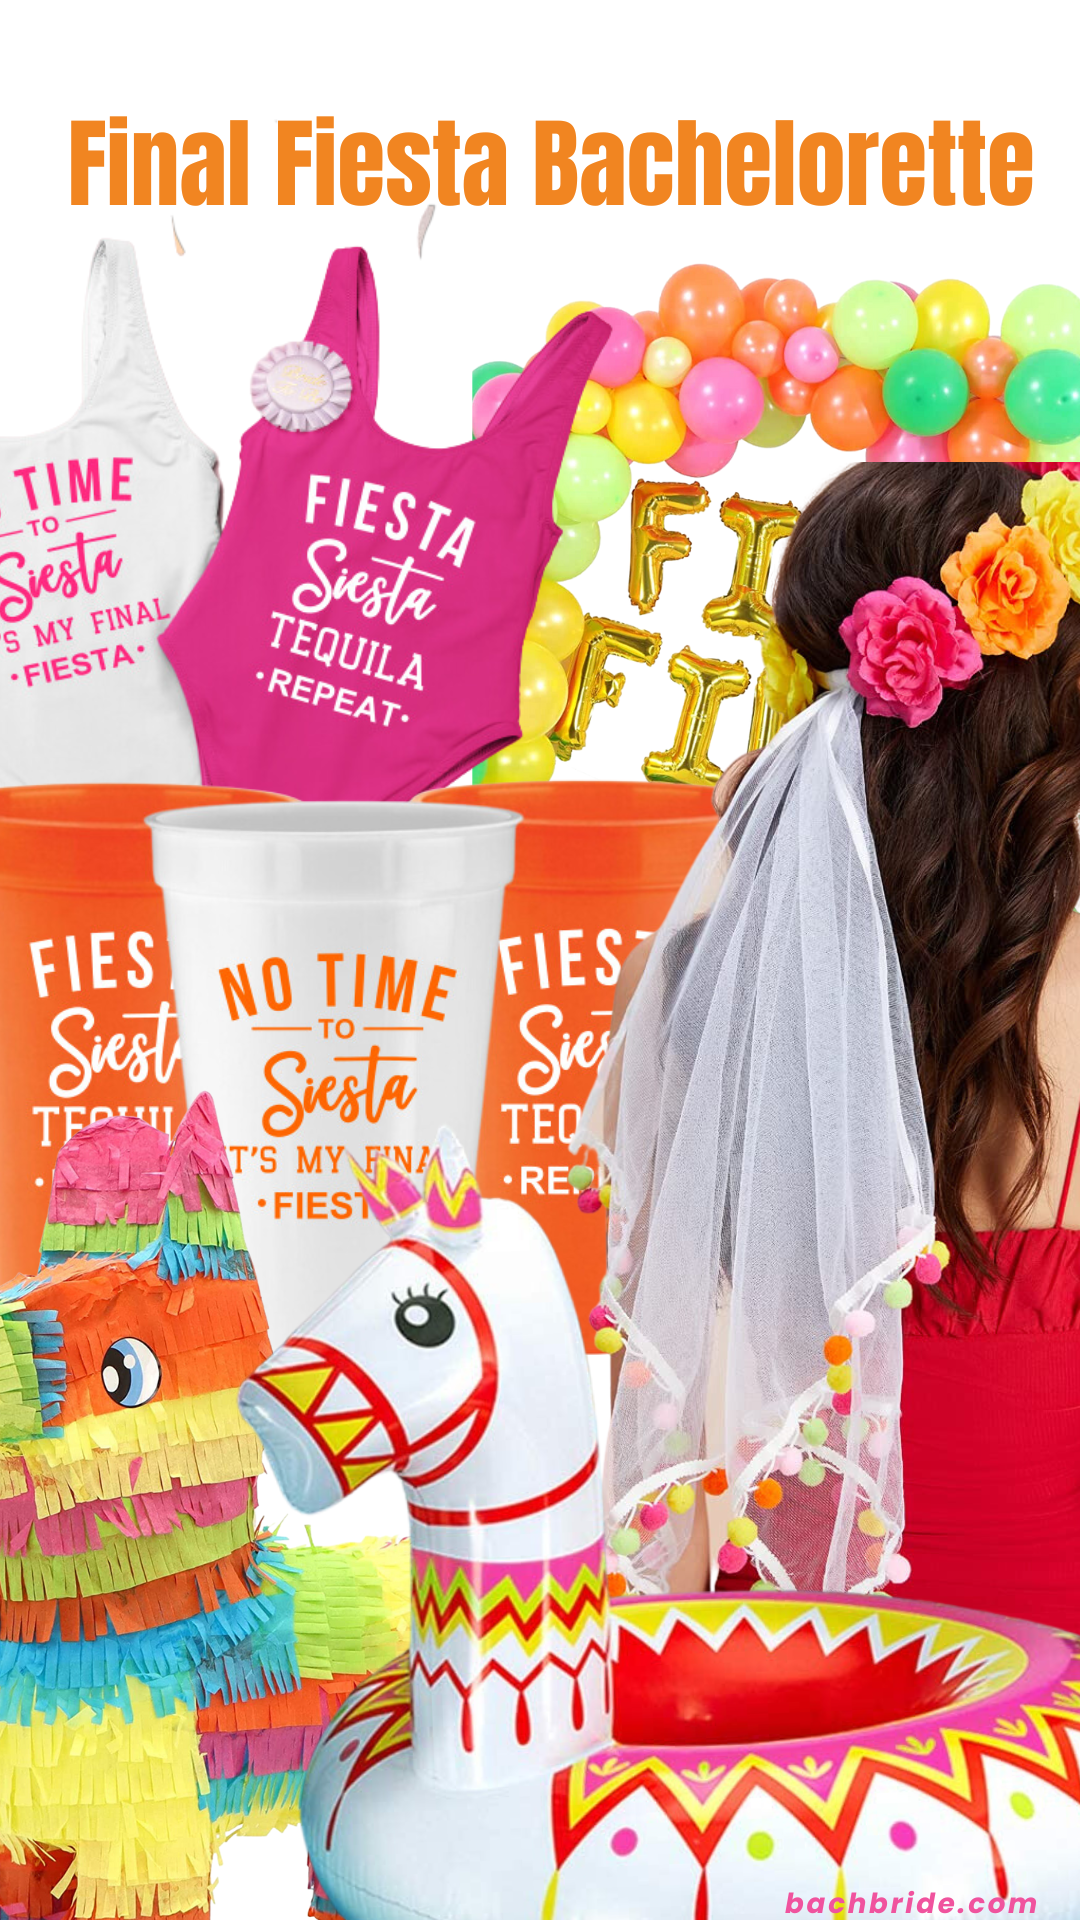 The Best Final Fiesta Bachelorette Party Supplies - Bach Bride